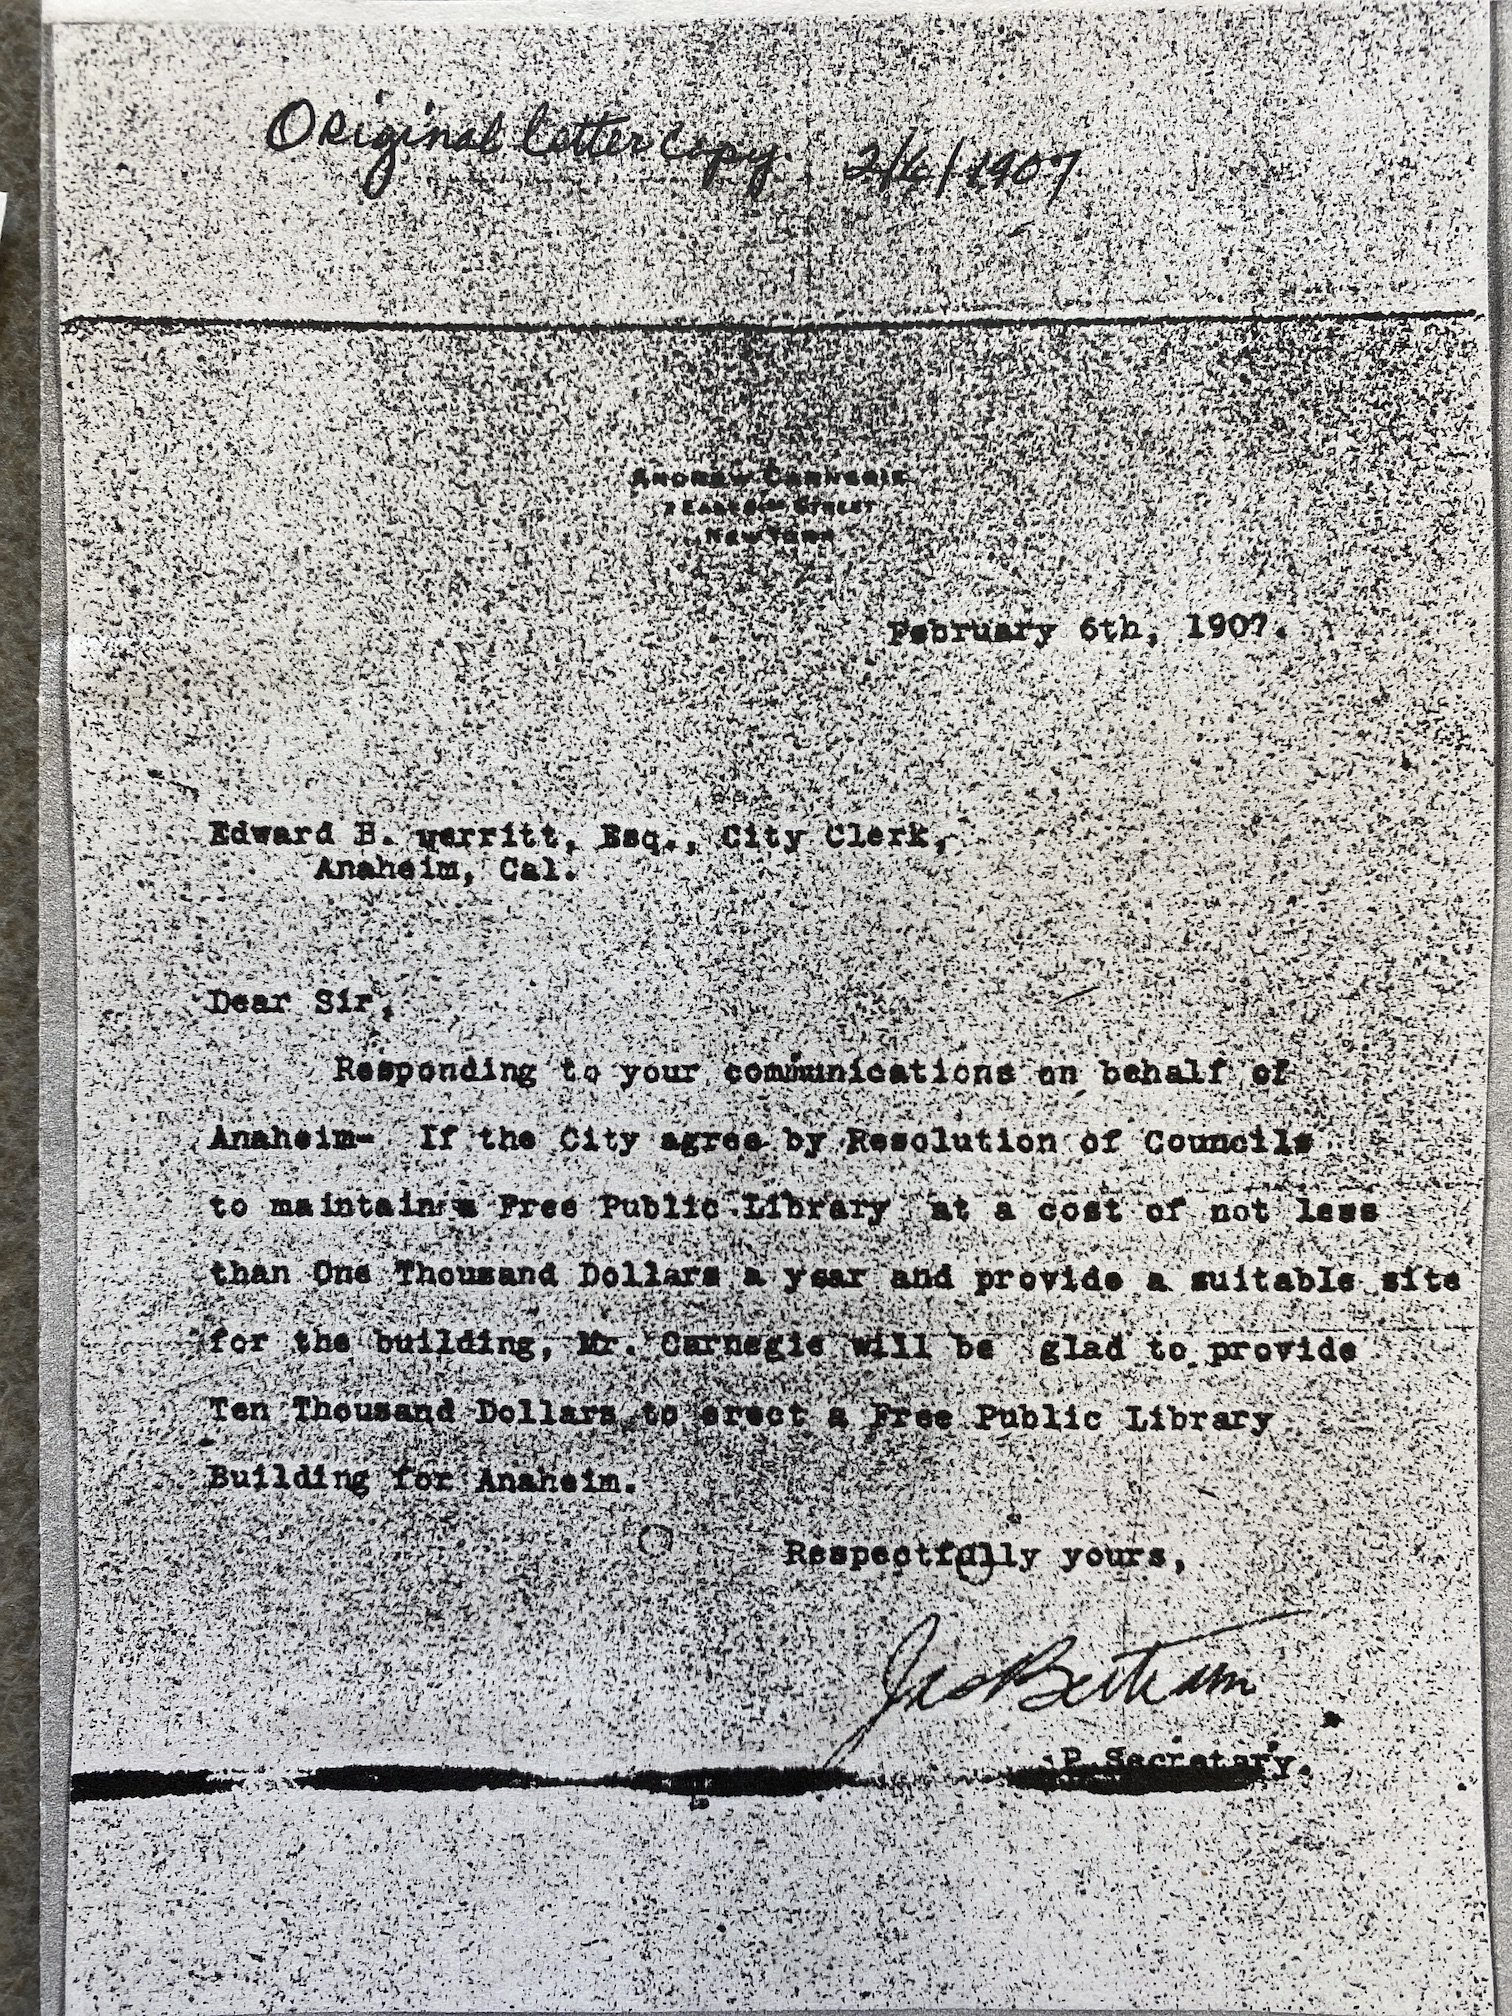 Feb. 1907 letter from Carnegie secretary to Anaheim city clerk